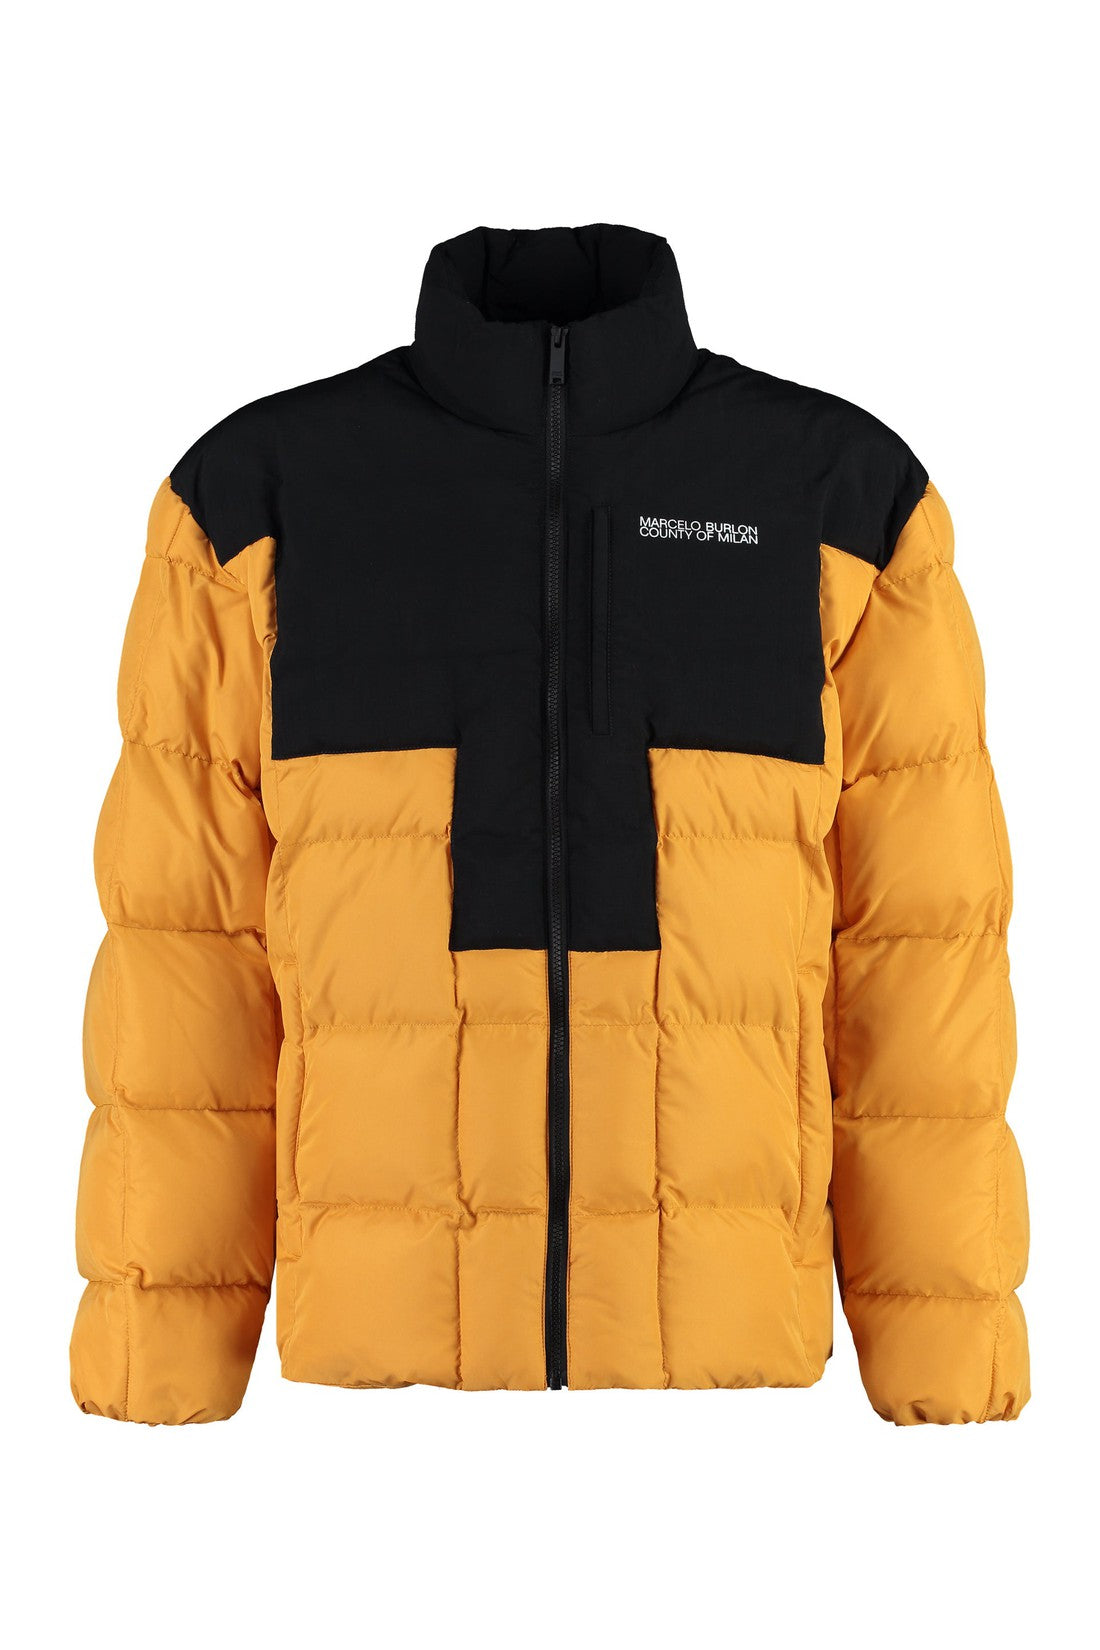 Marcelo Burlon County of Milan-OUTLET-SALE-Full zip down jacket-ARCHIVIST